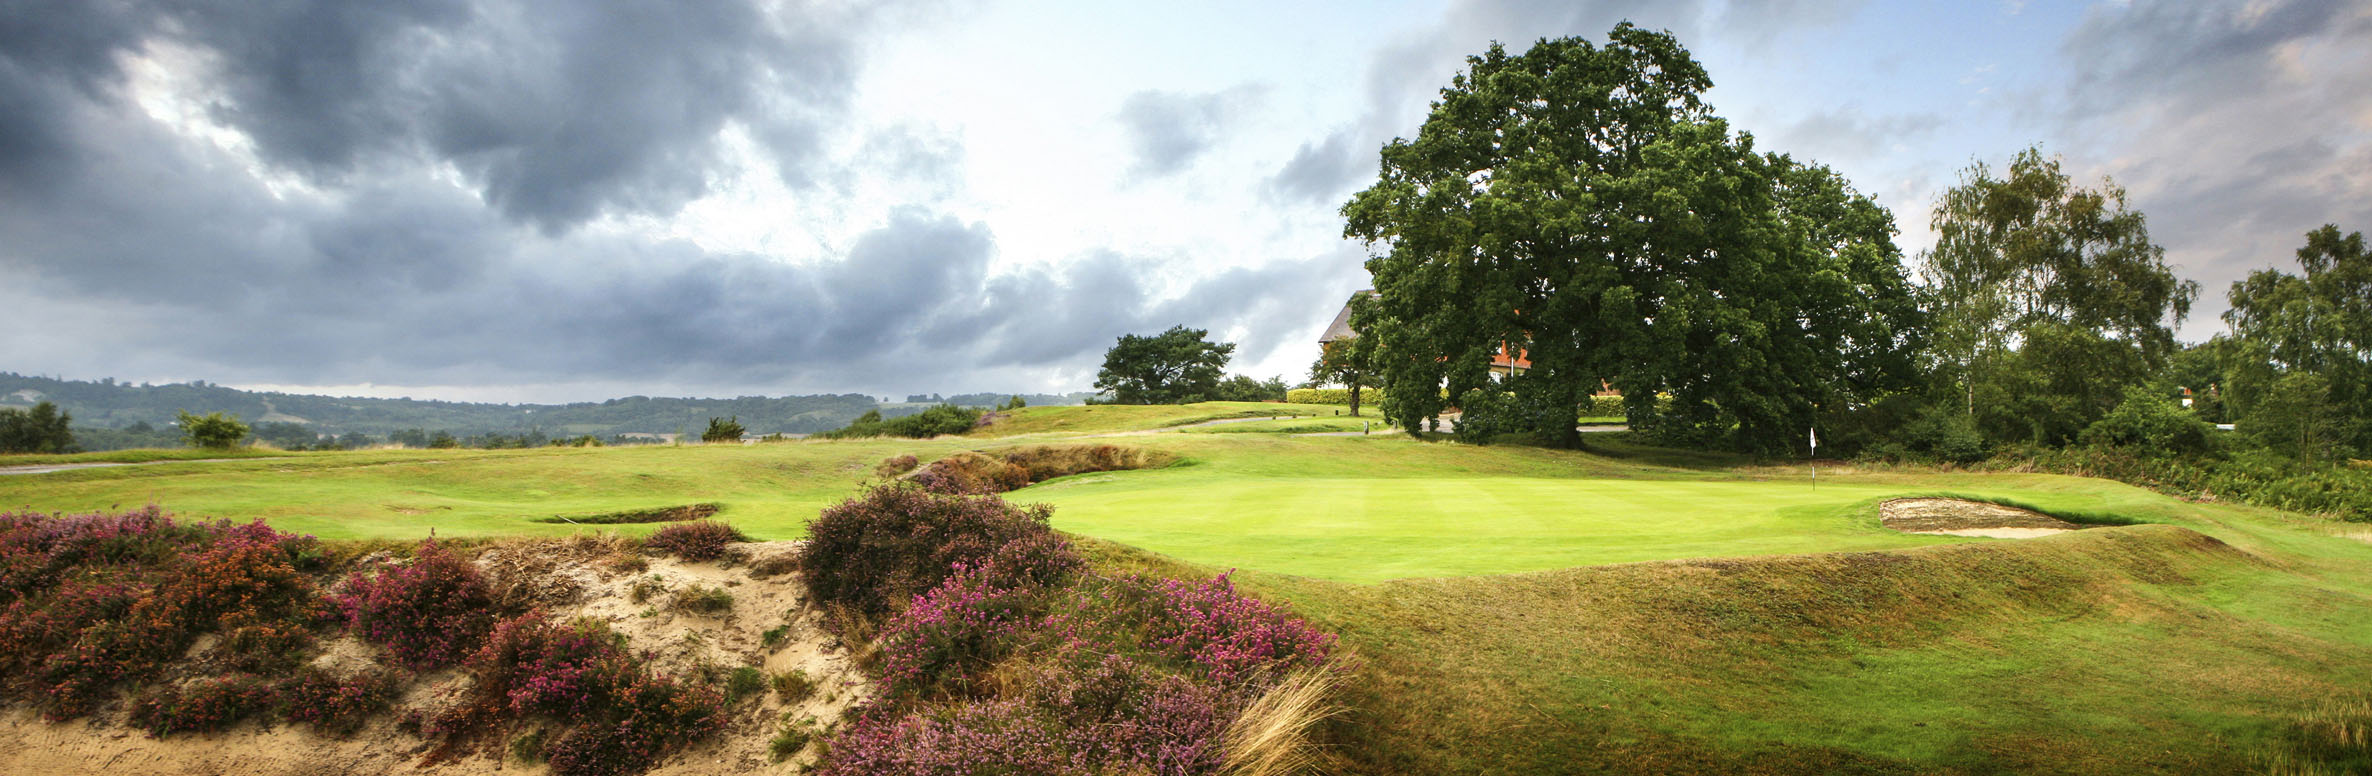 Golf Course Image - Reigate Heath Golf Club No. 9